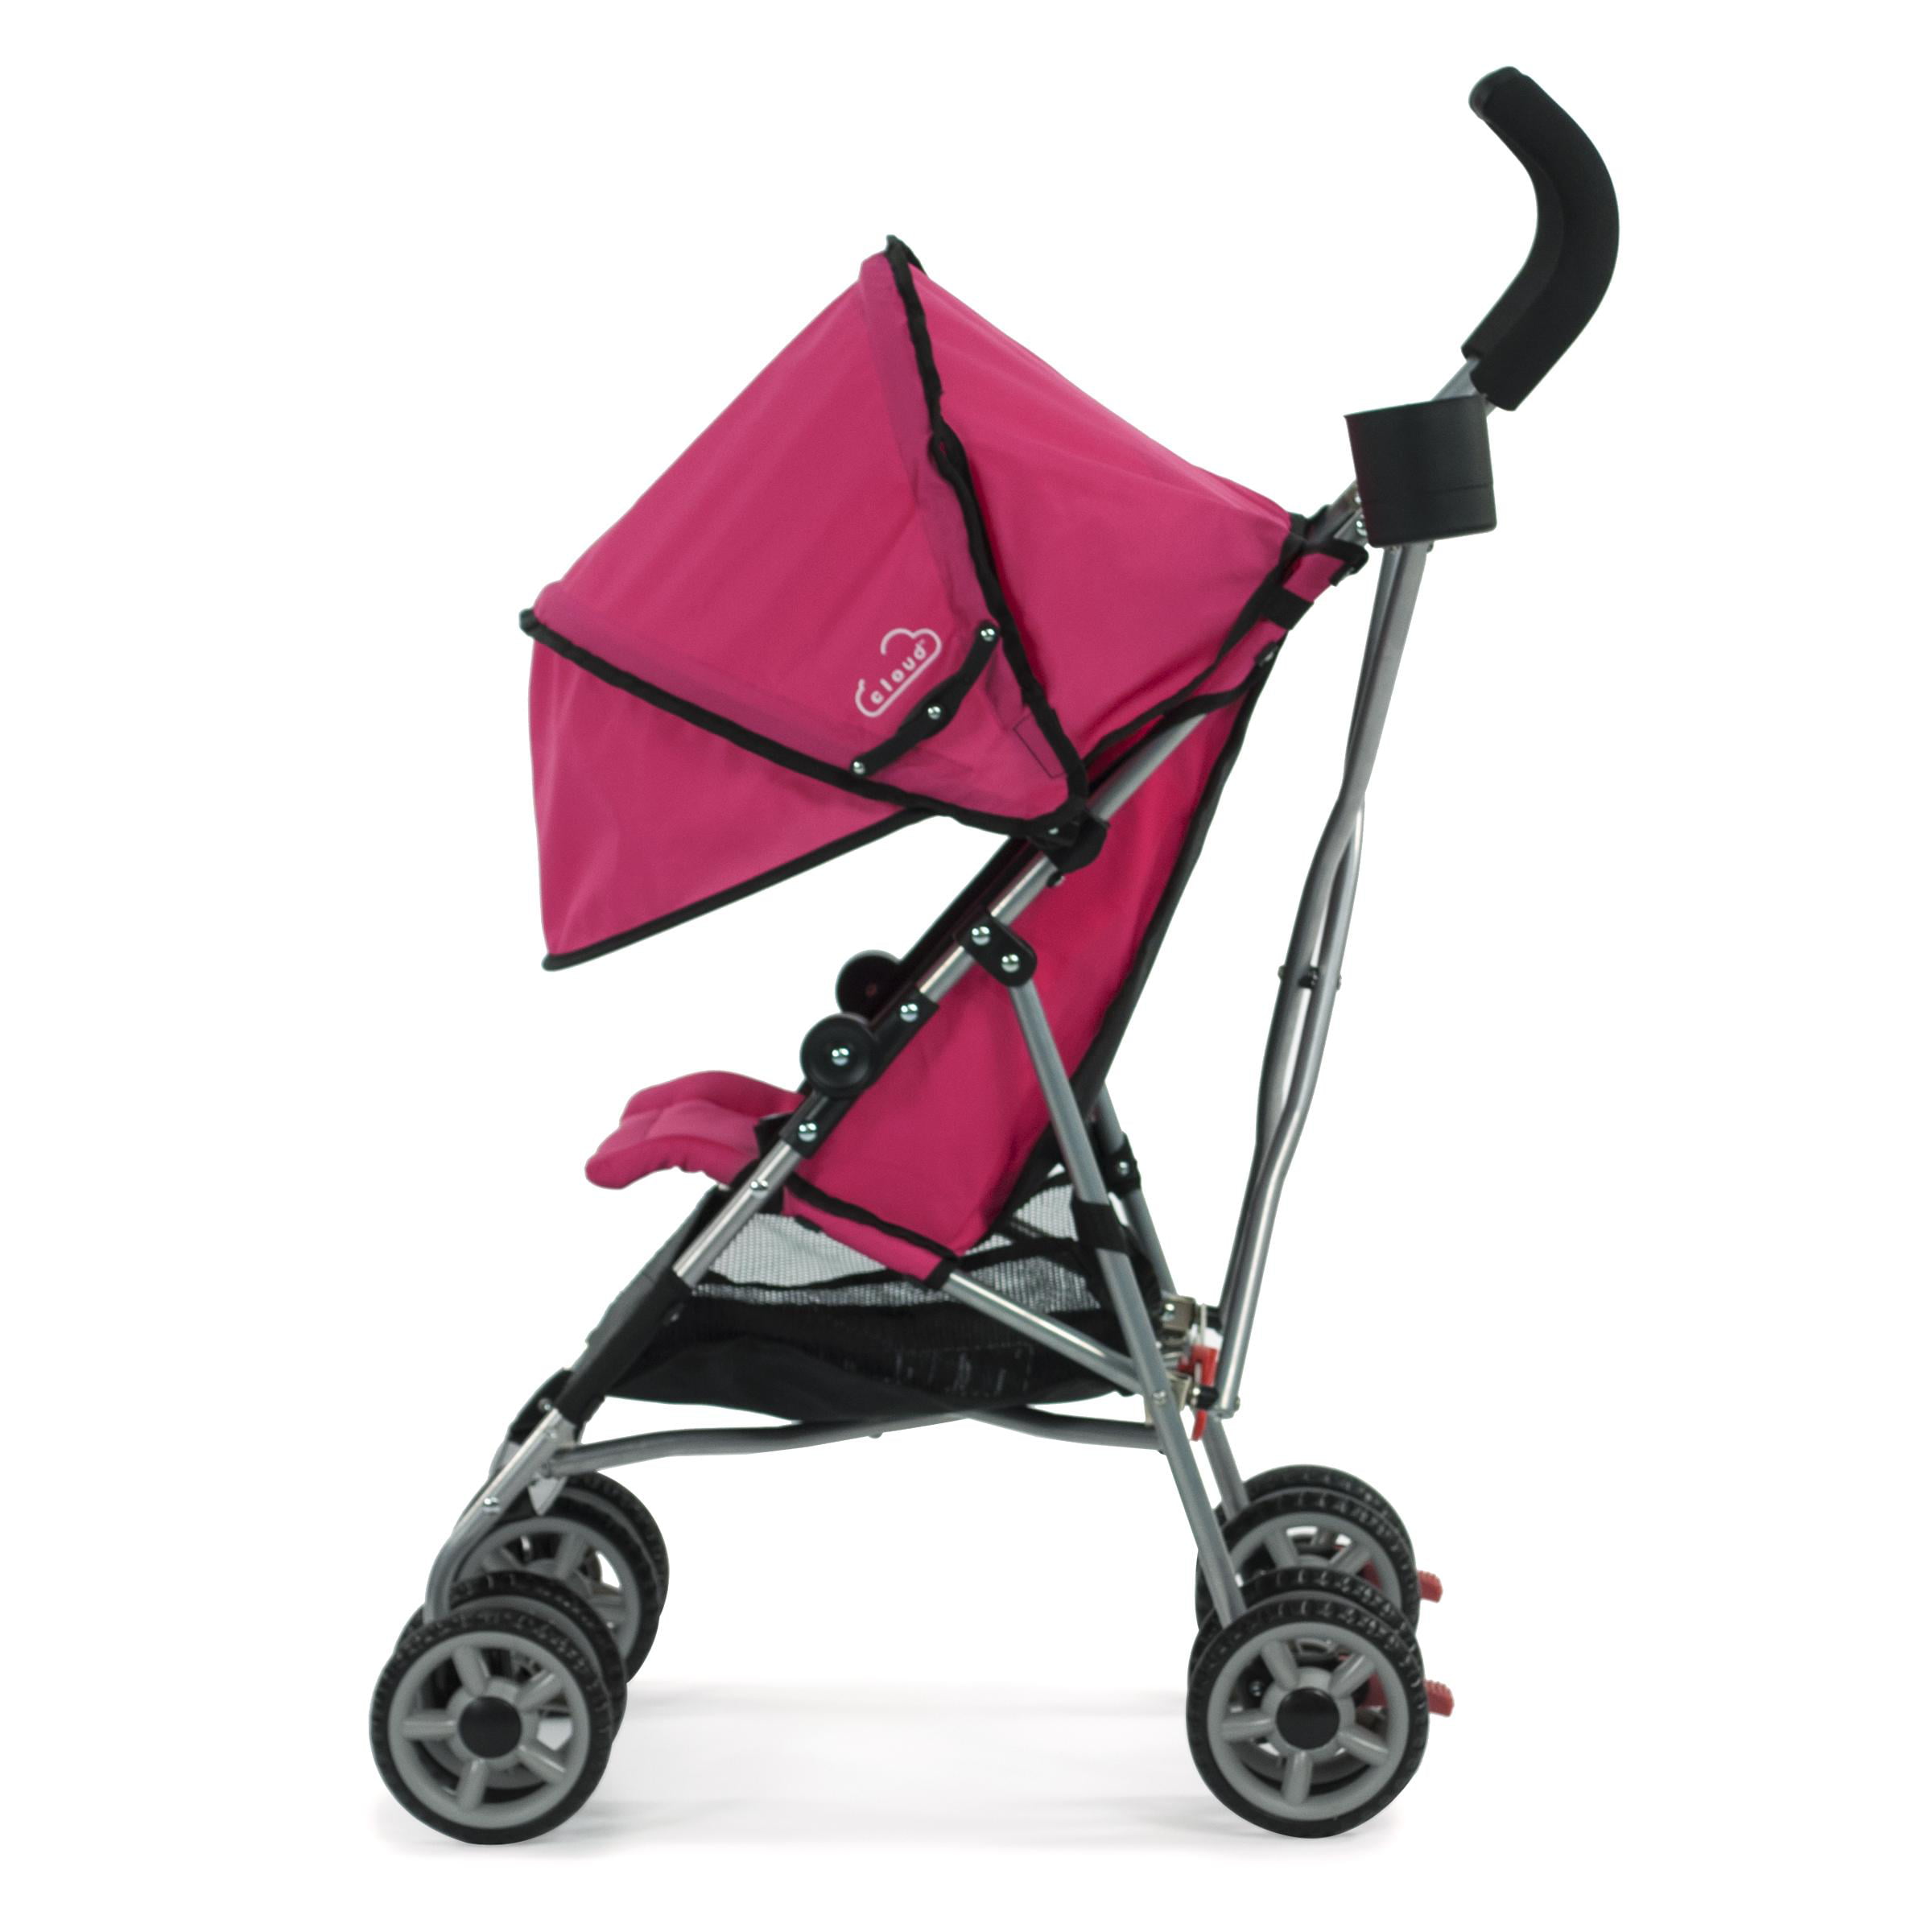 kolcraft cloud umbrella stroller pink